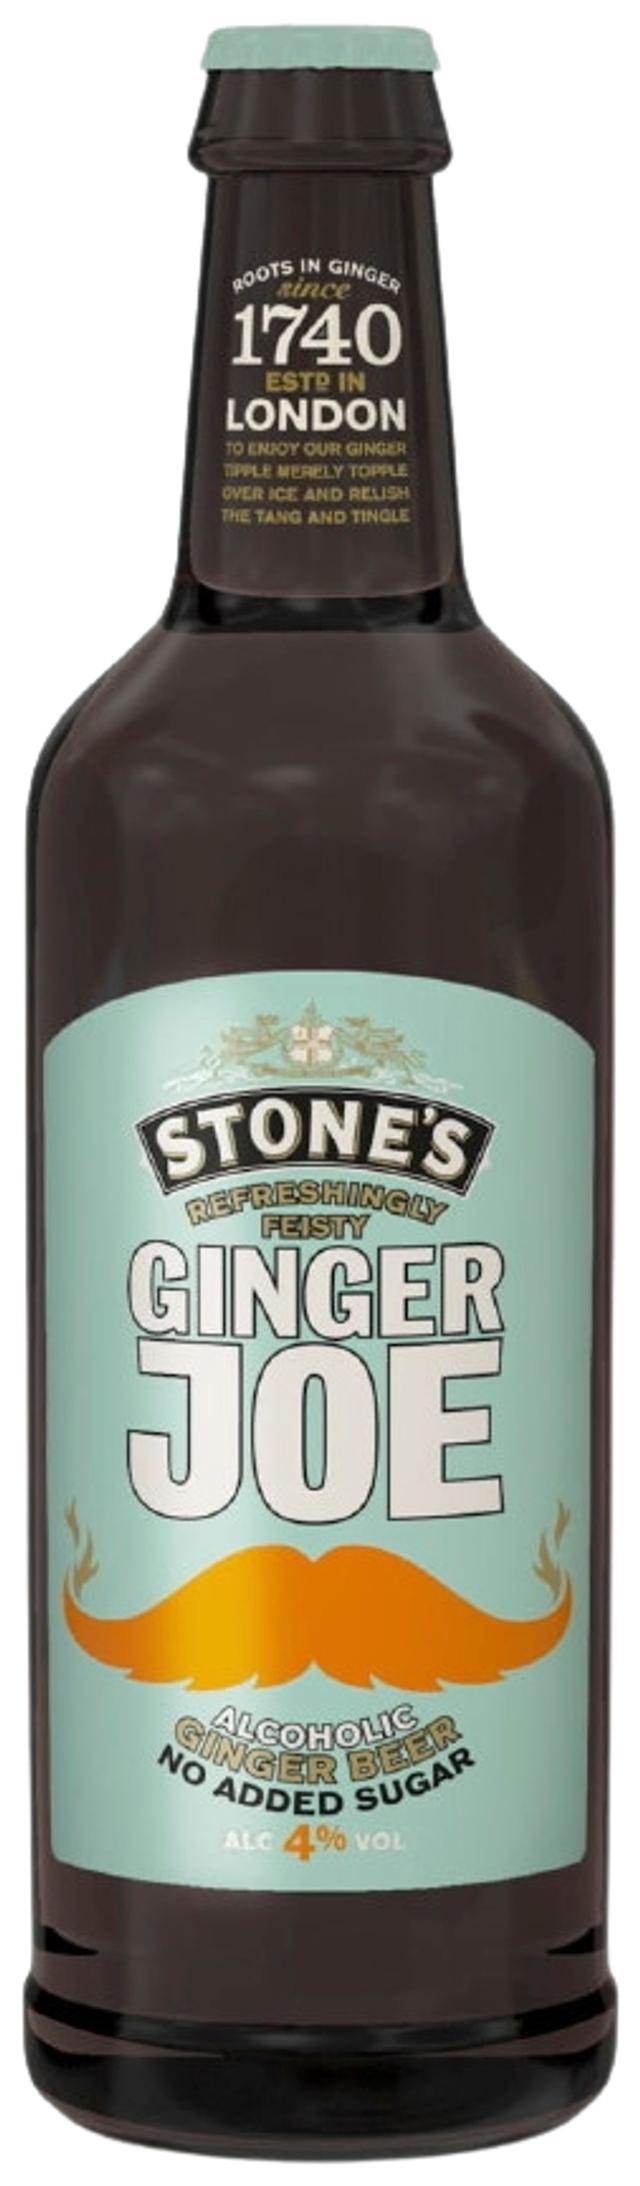 Stone's Ginger Joe reduced calorie 4% 33cl inkivääriolut